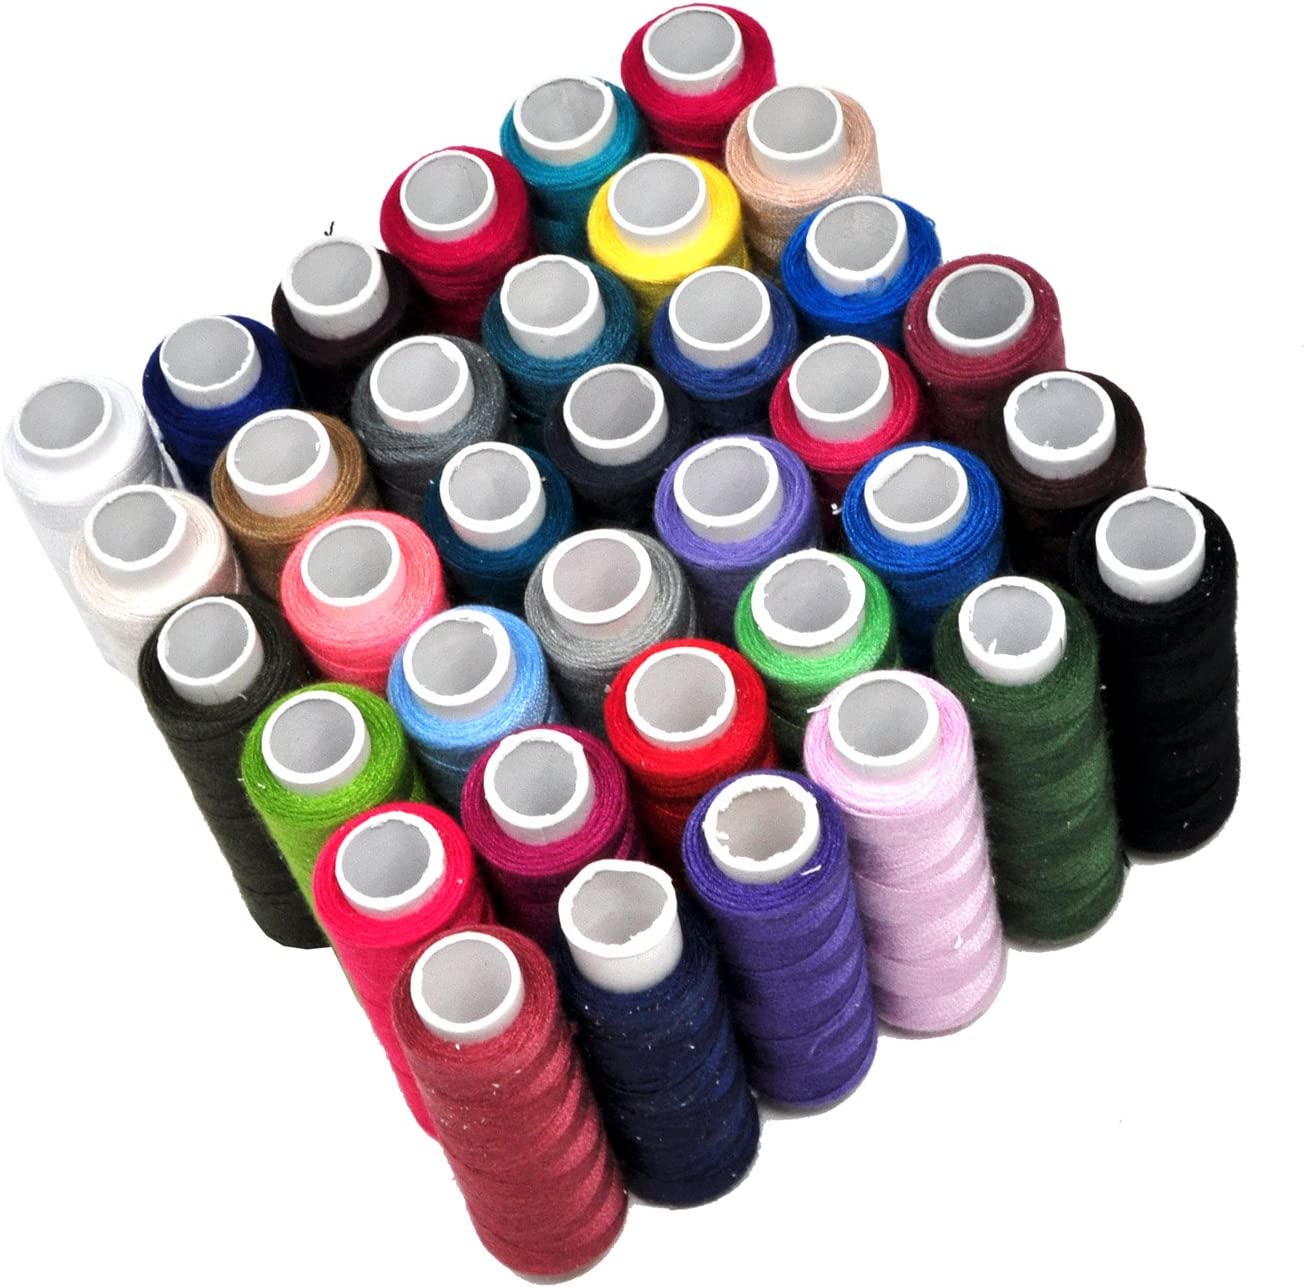 Mandala Crafts Plastic Embroidery Floss Organizer Box with